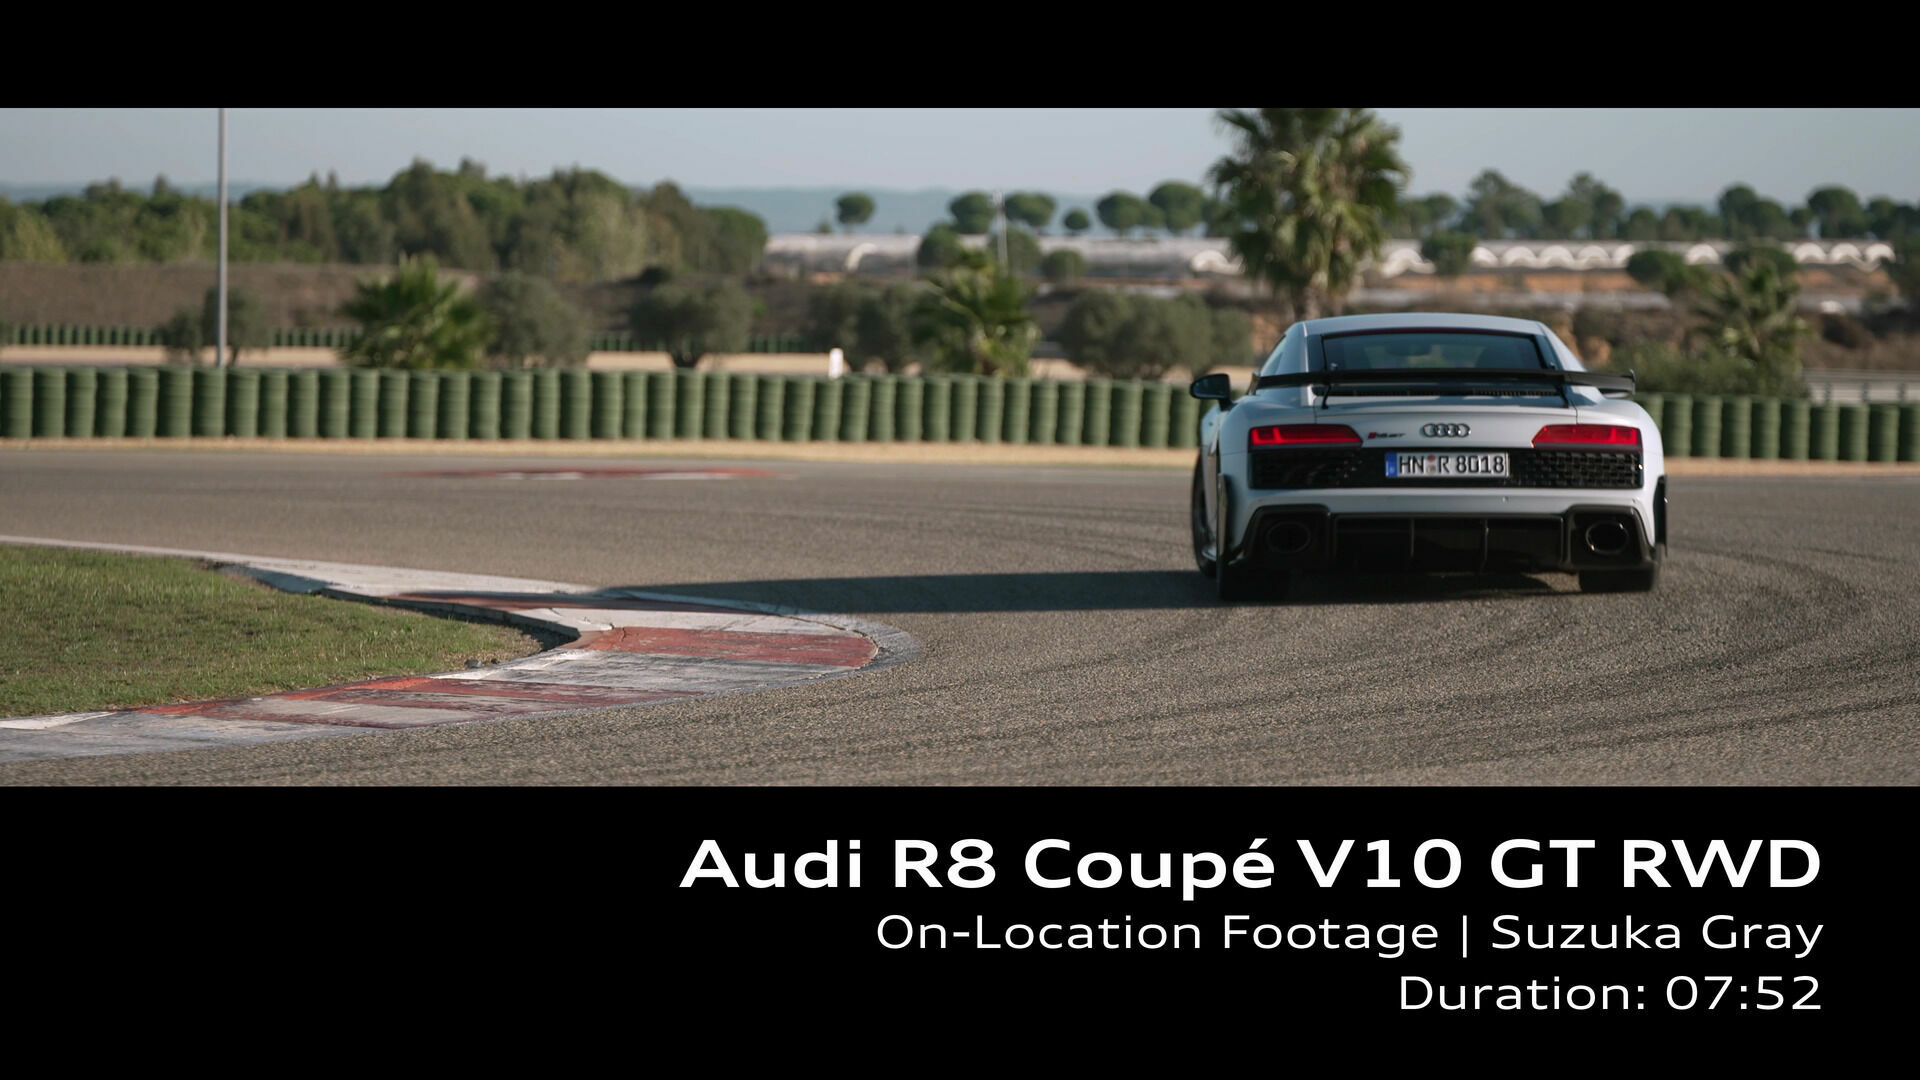 Footage: Audi R8 Coupé V10 GT RWD Suzukagrau